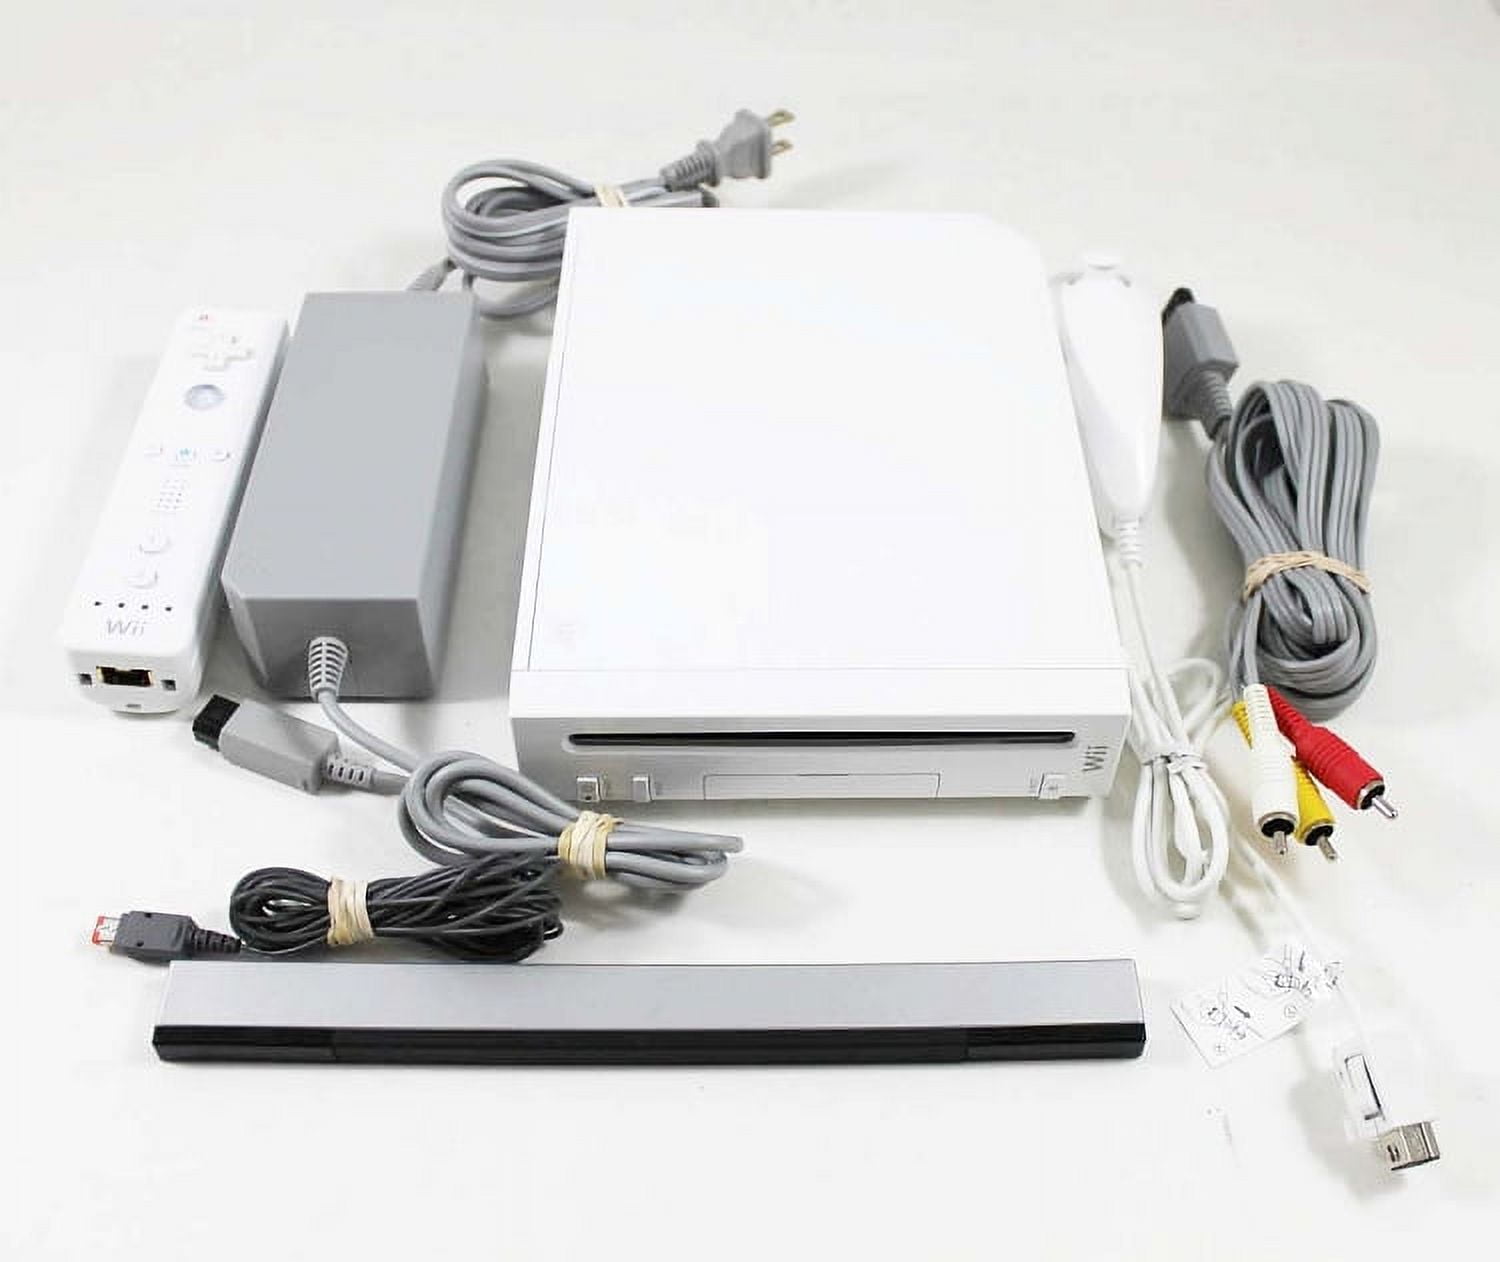 NINTENDO Wii U Console/Parts/Accessories